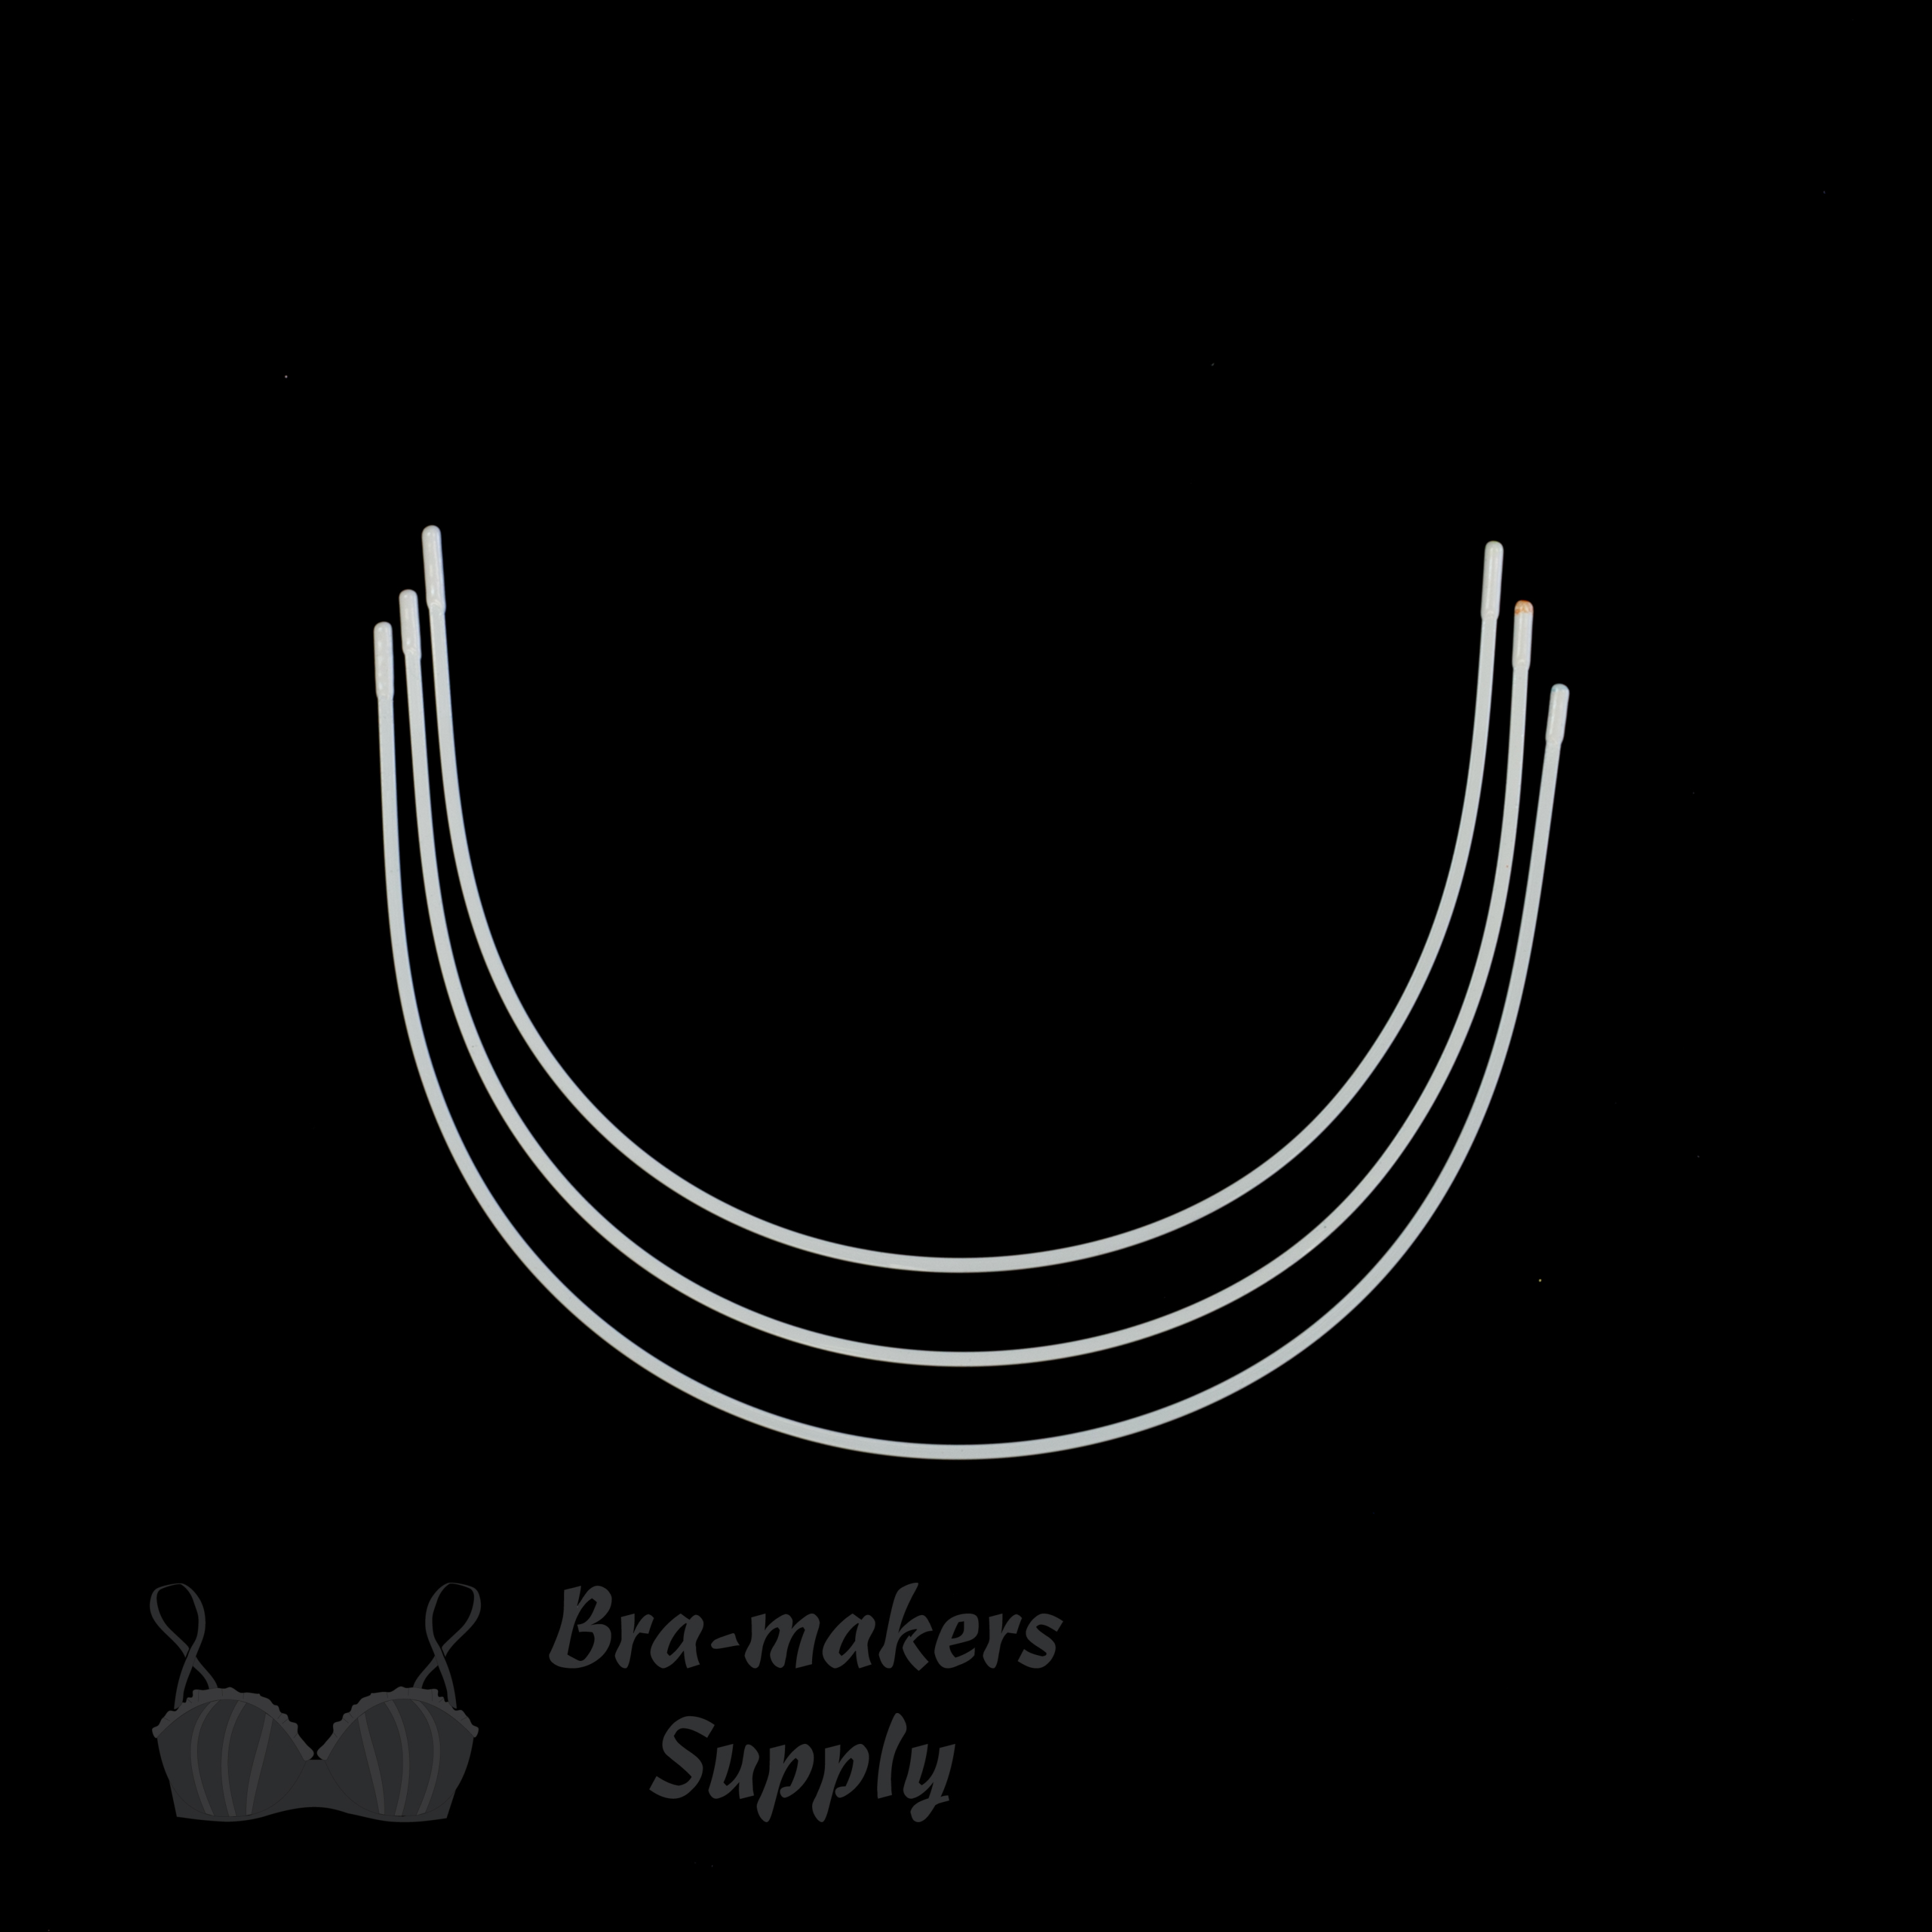 super-long underwire metal bra underwire WSL-3-48 from Bra-Makers Supply set of 3 shown